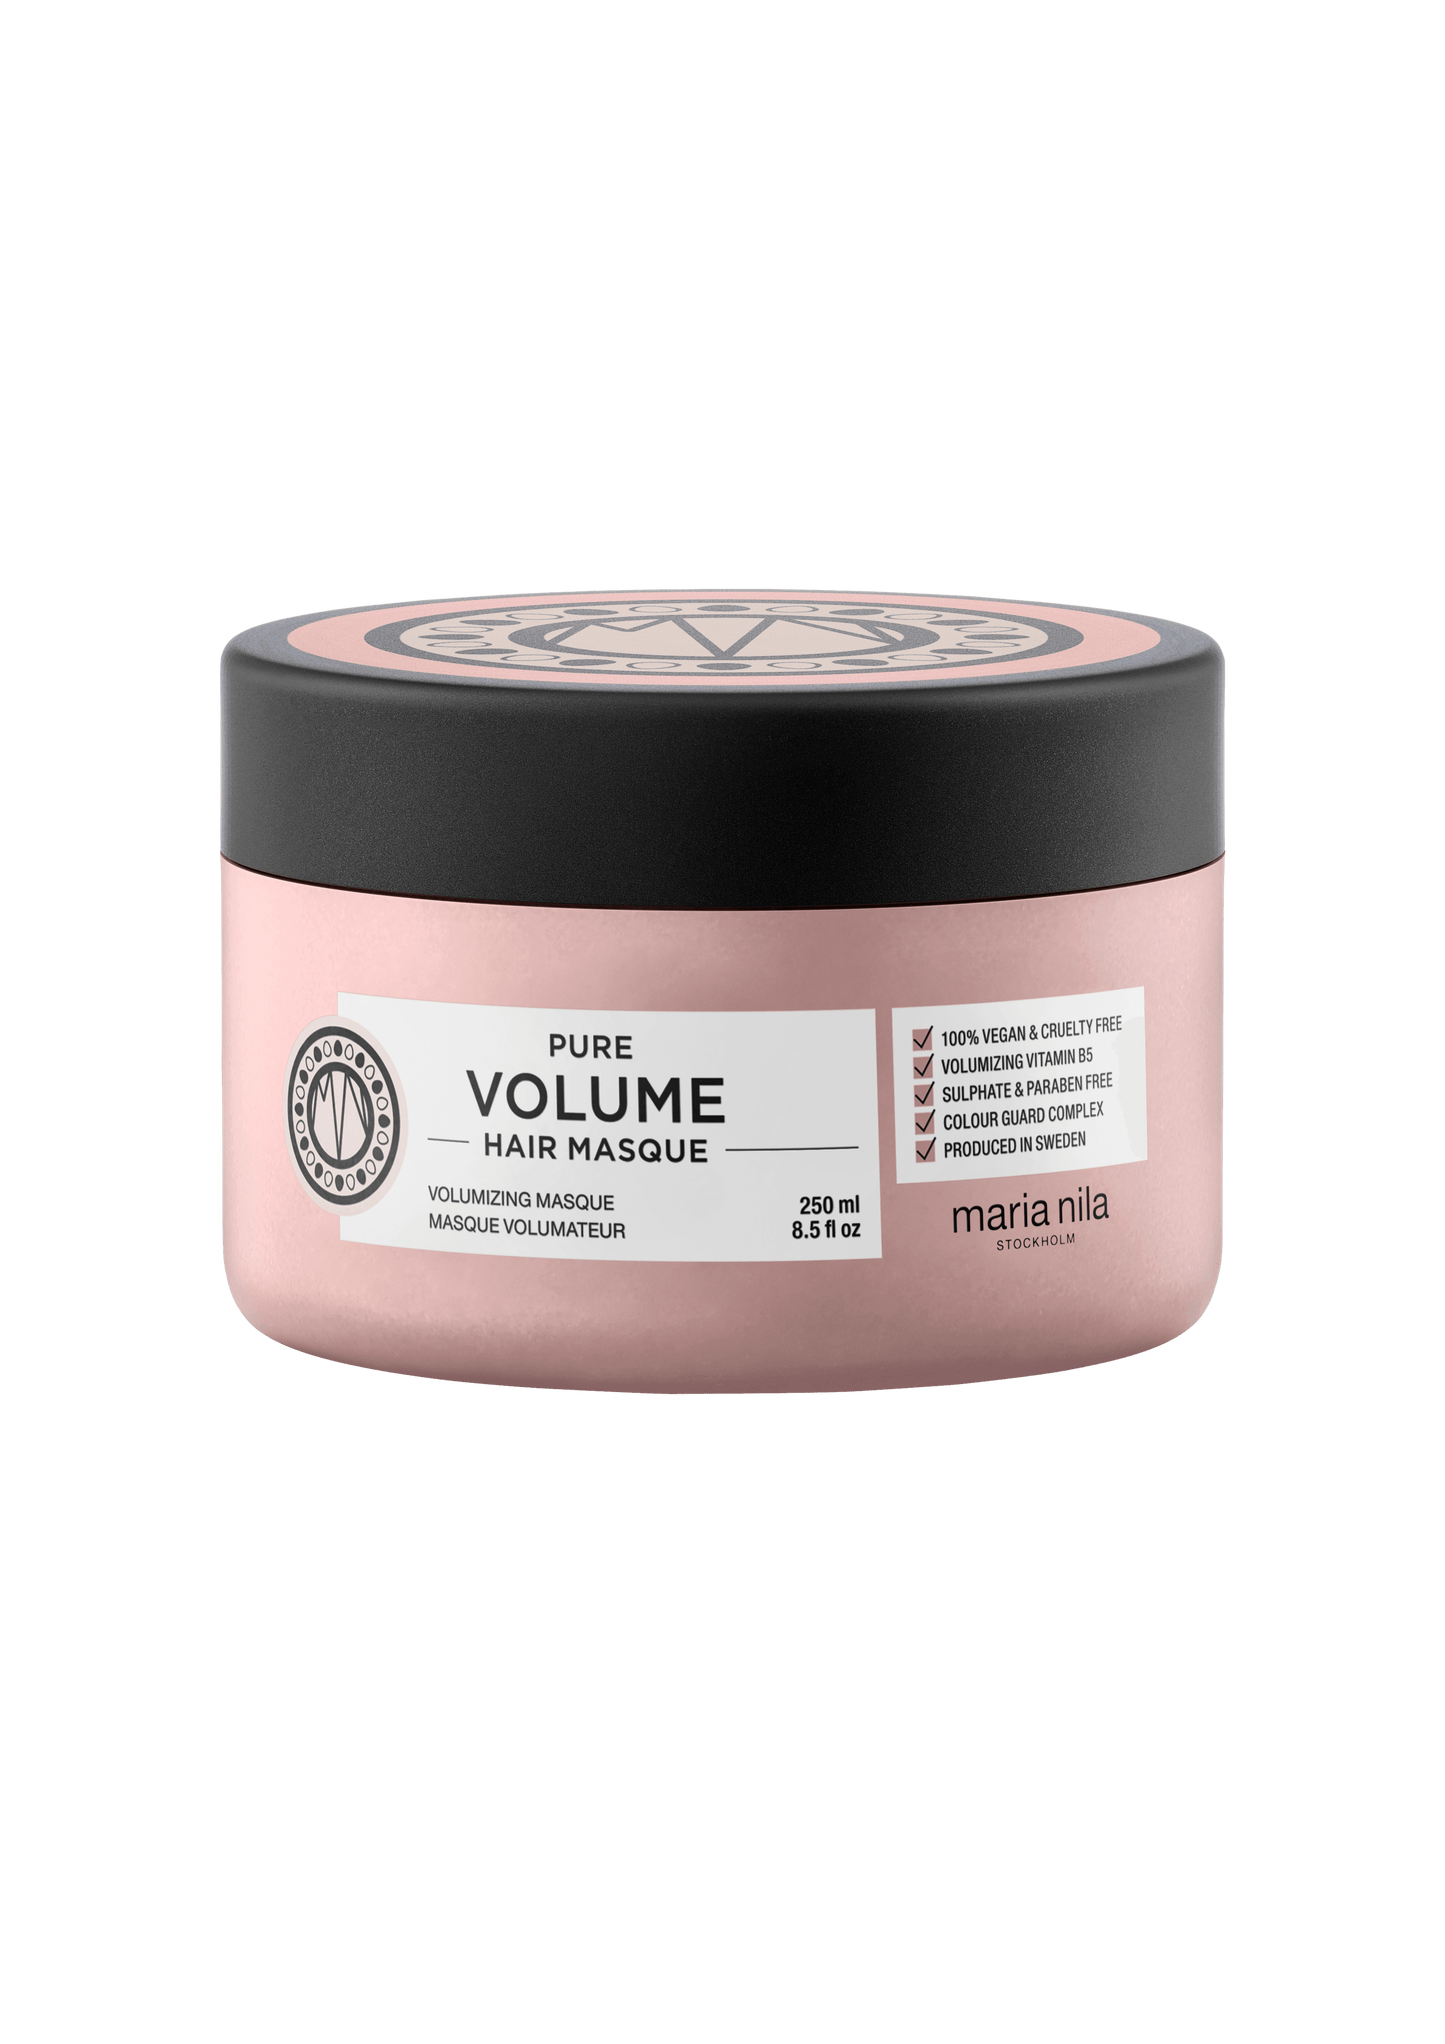 Pure Volume Masque - The Coloroom 